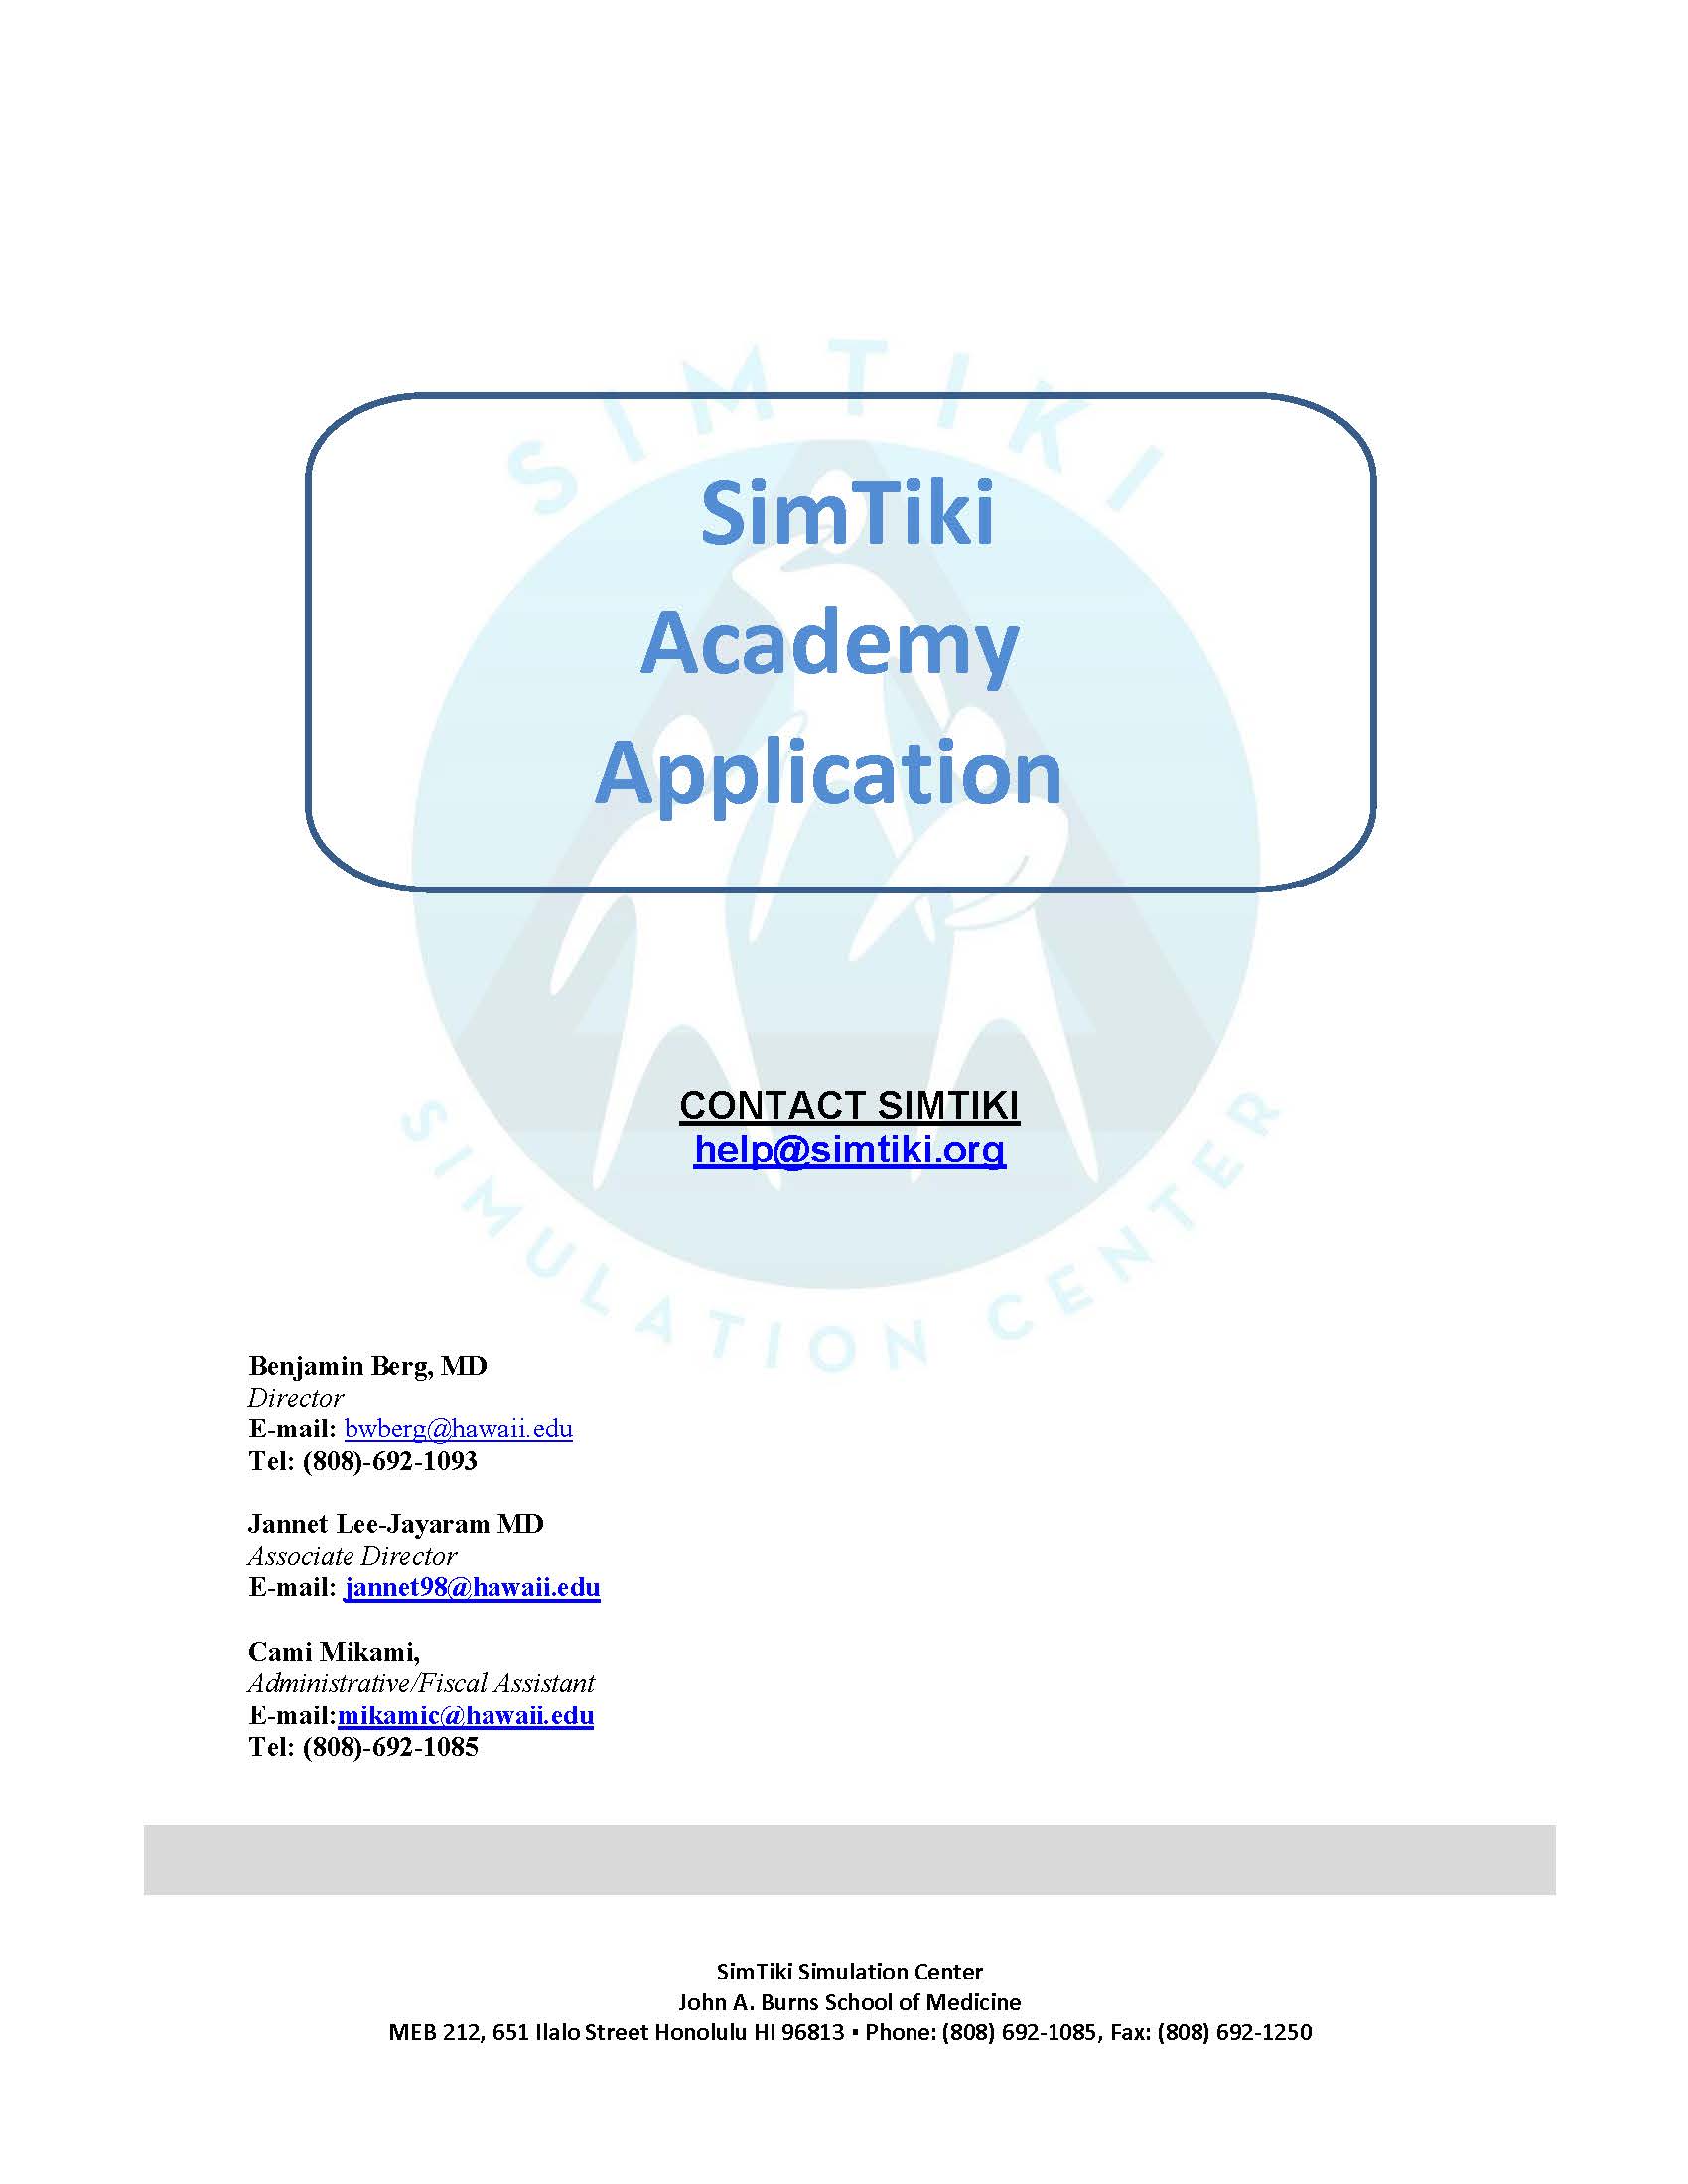 SimTiki academy program application